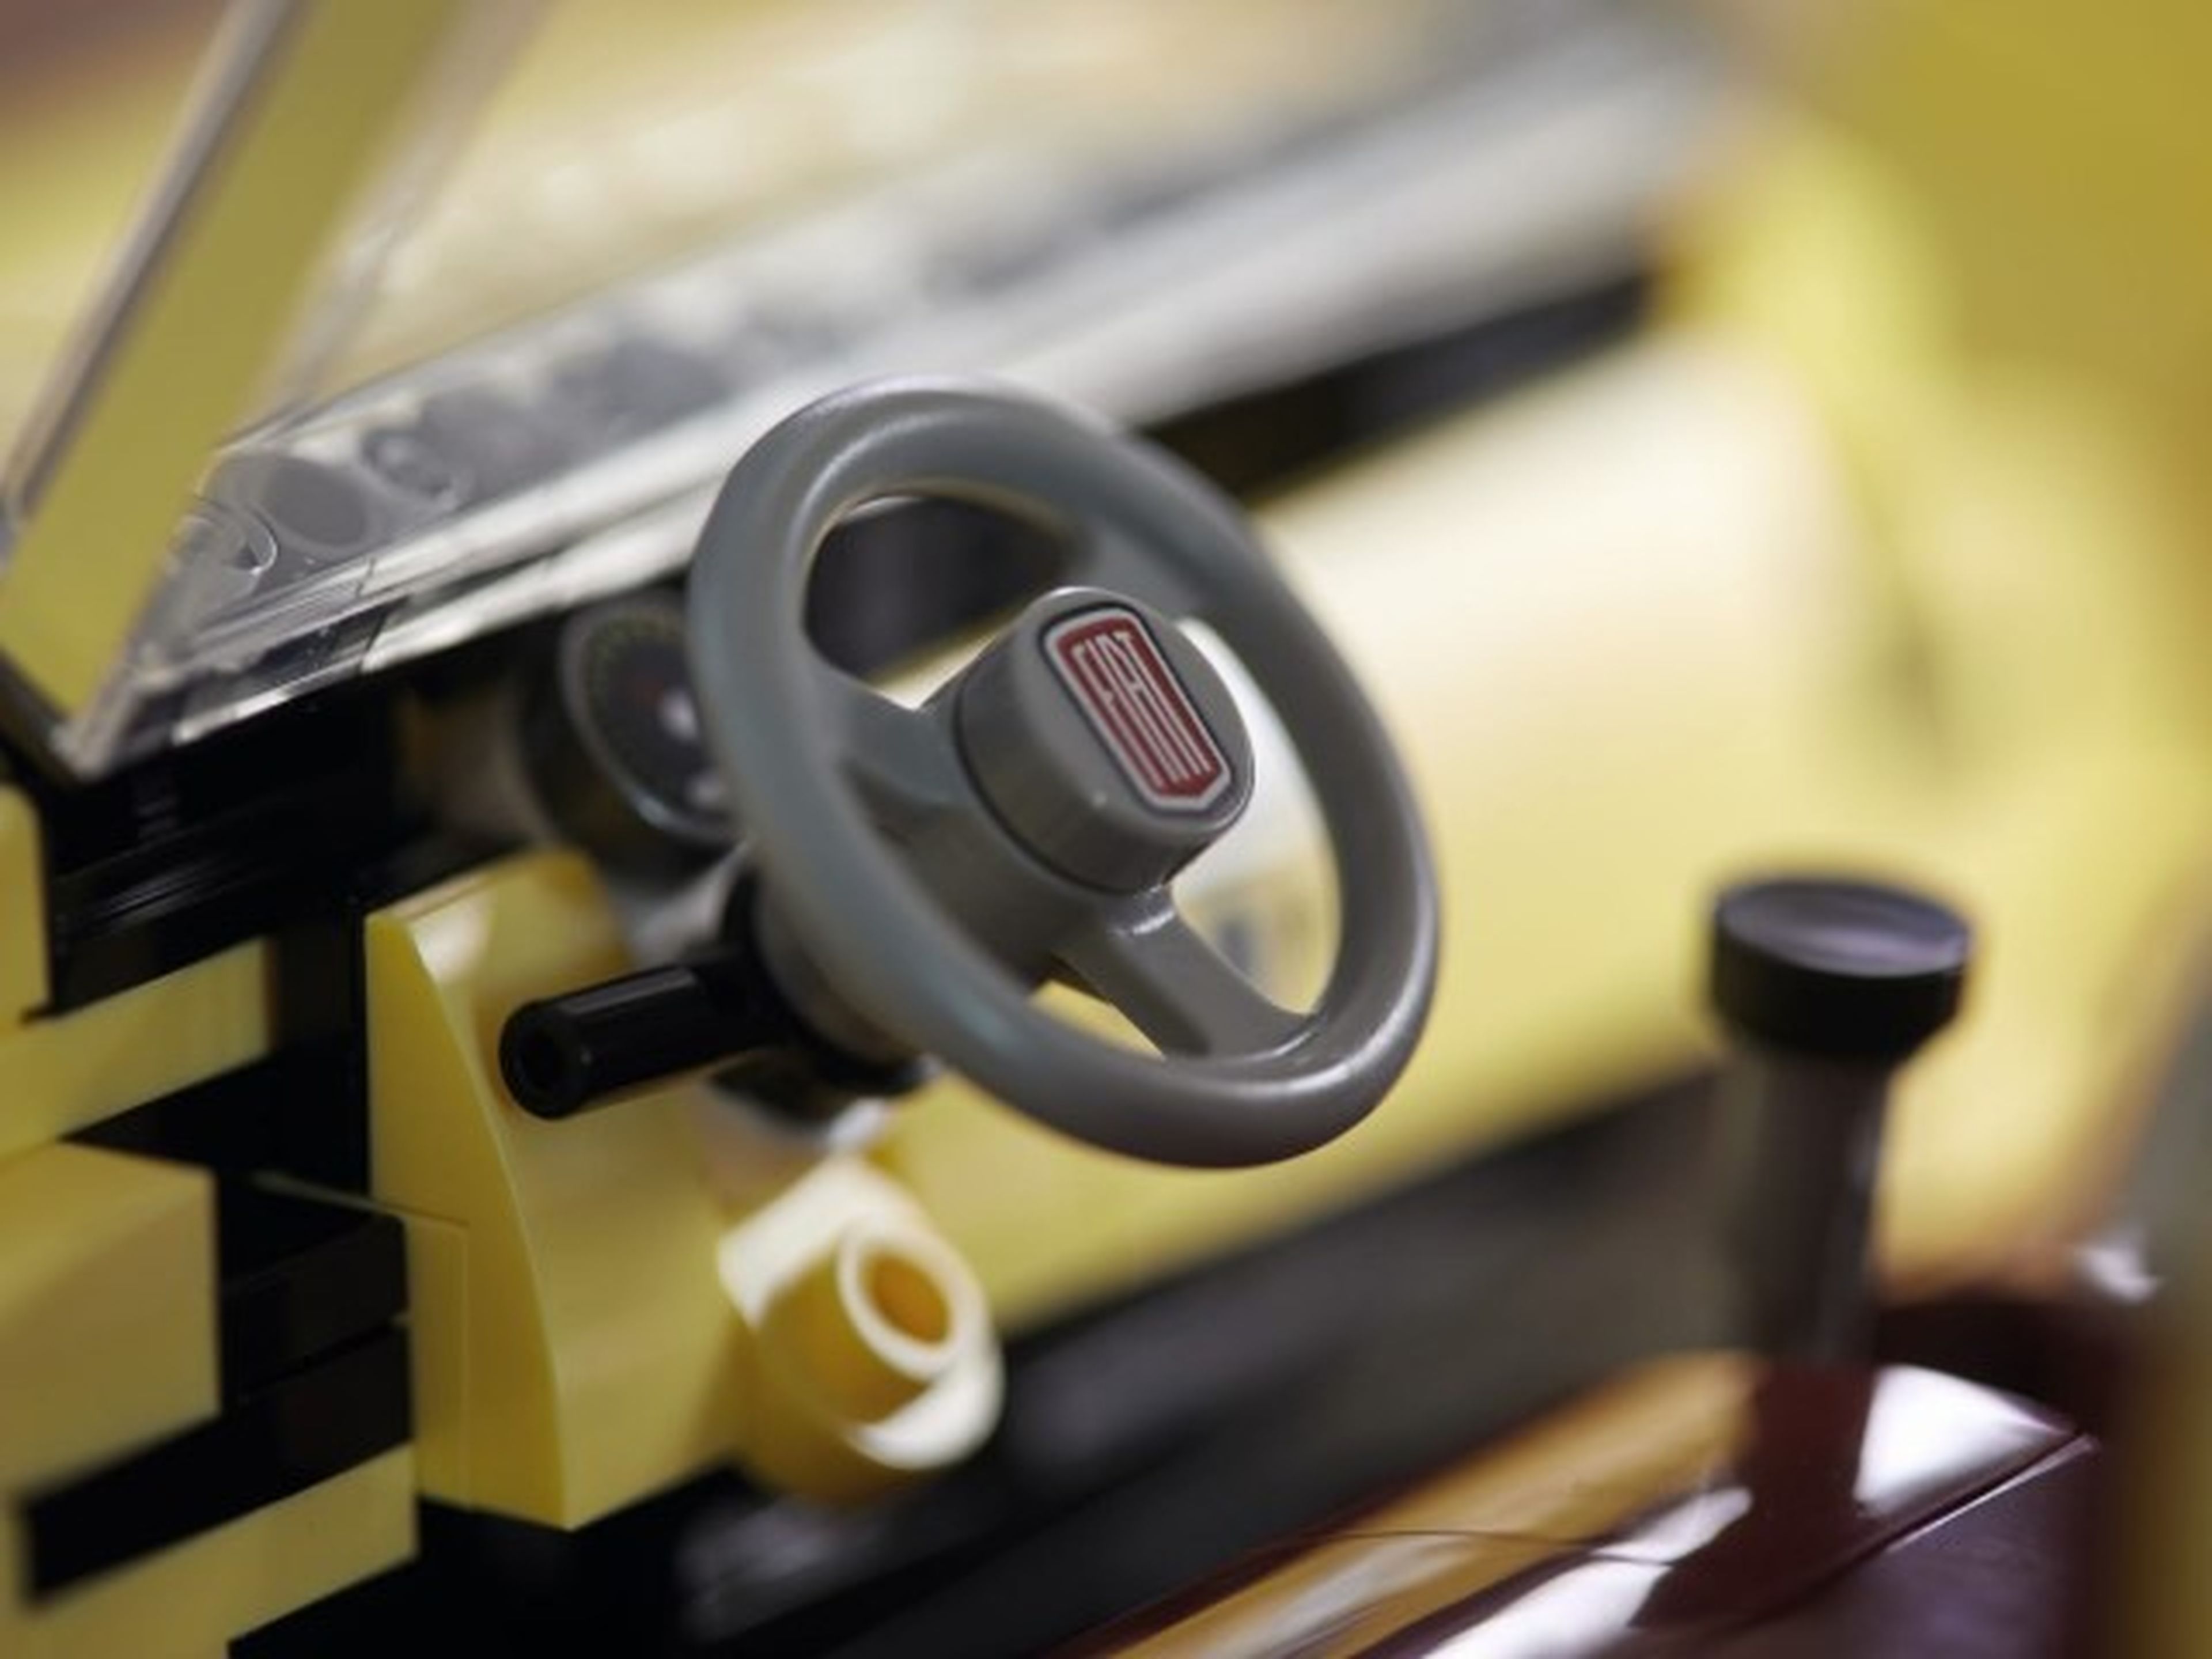 El Fiat 500 original llega a la colección de Lego Creator Expert